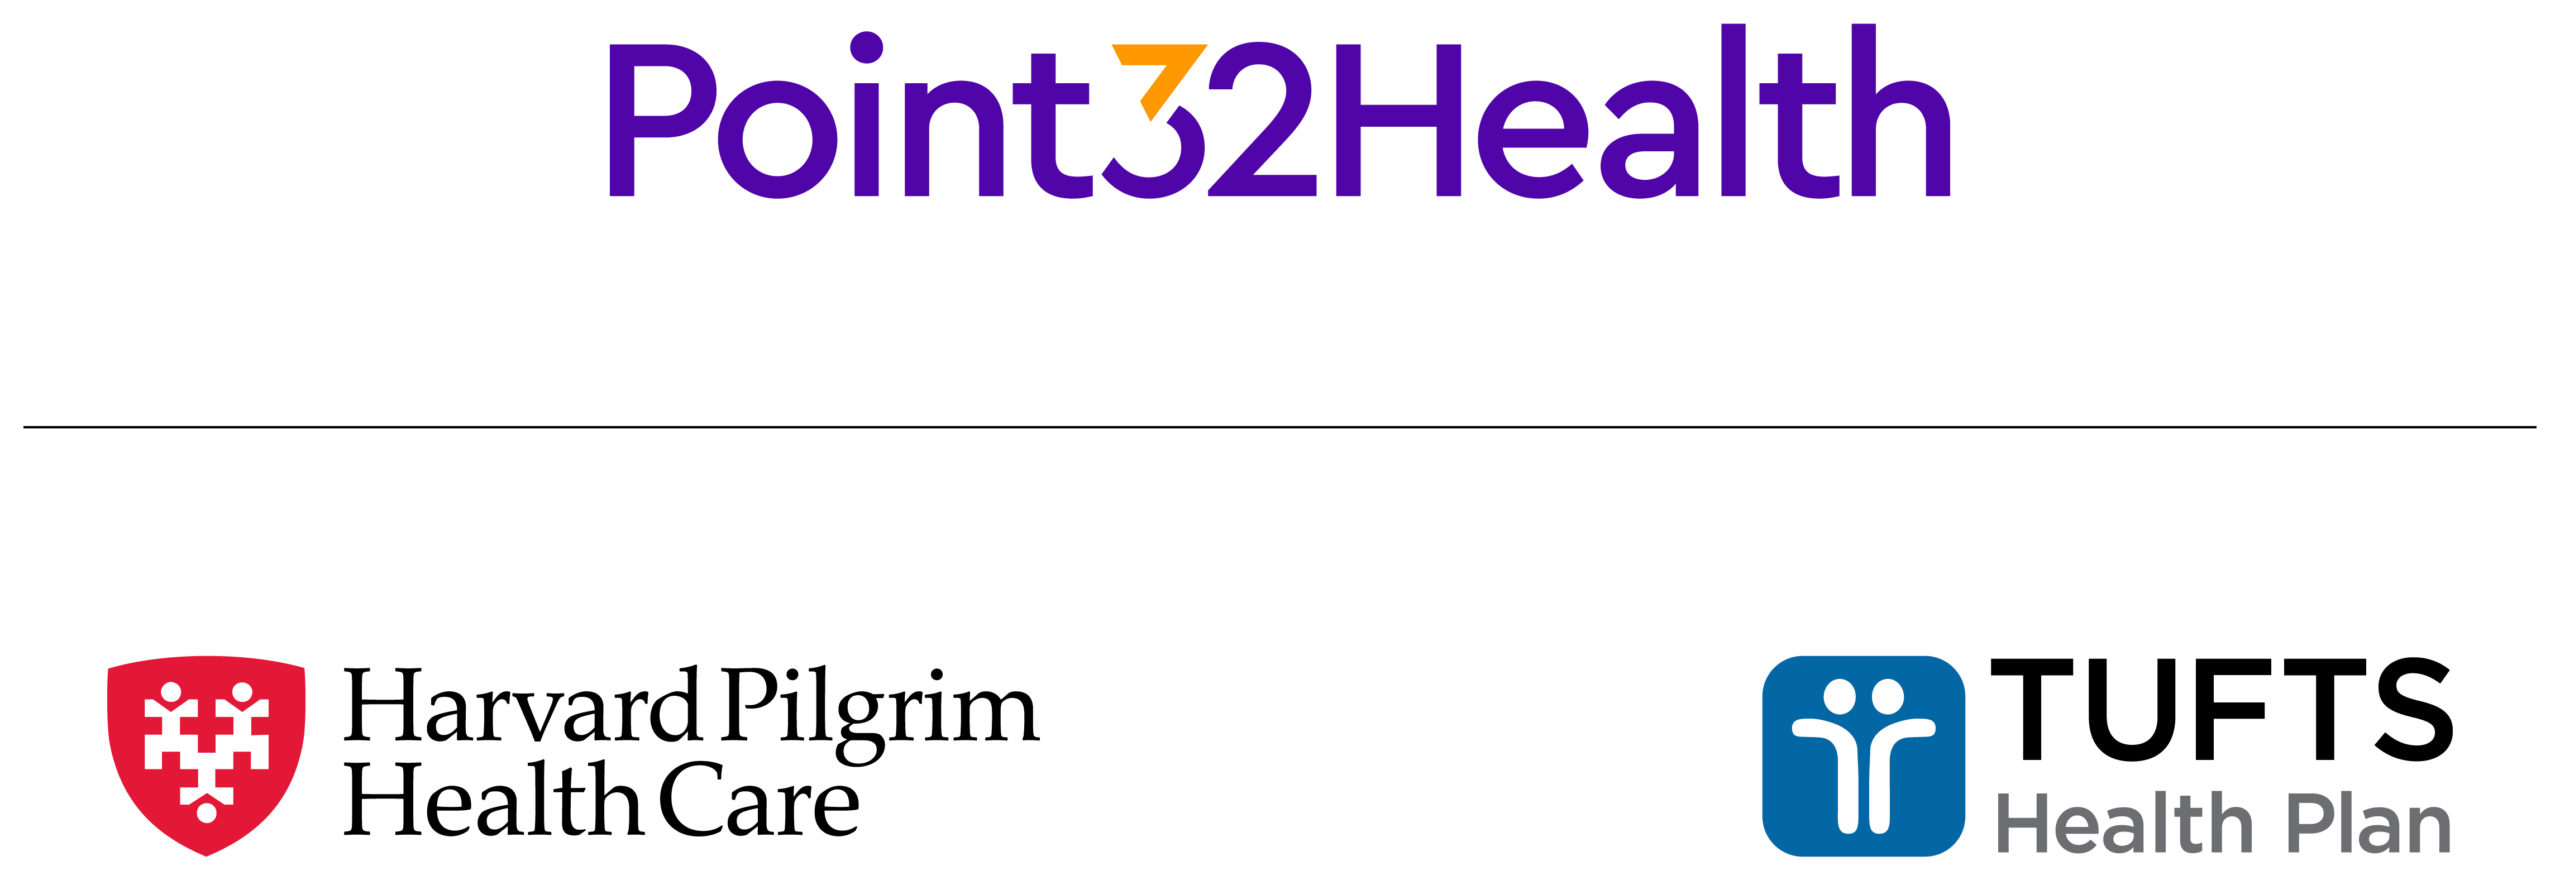 Point 32 Health Logo